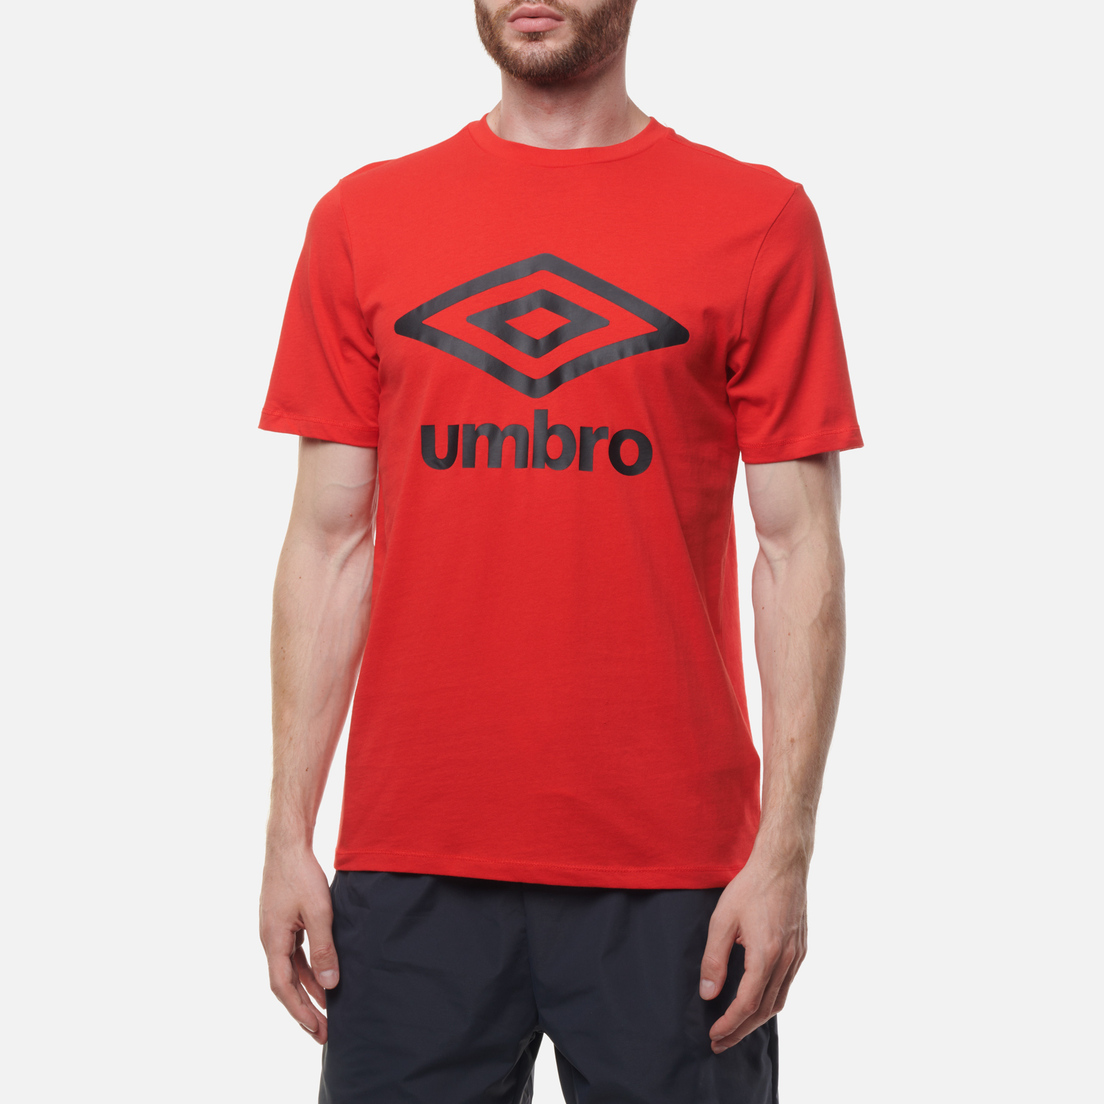 Umbro Мужская футболка FW Large Logo